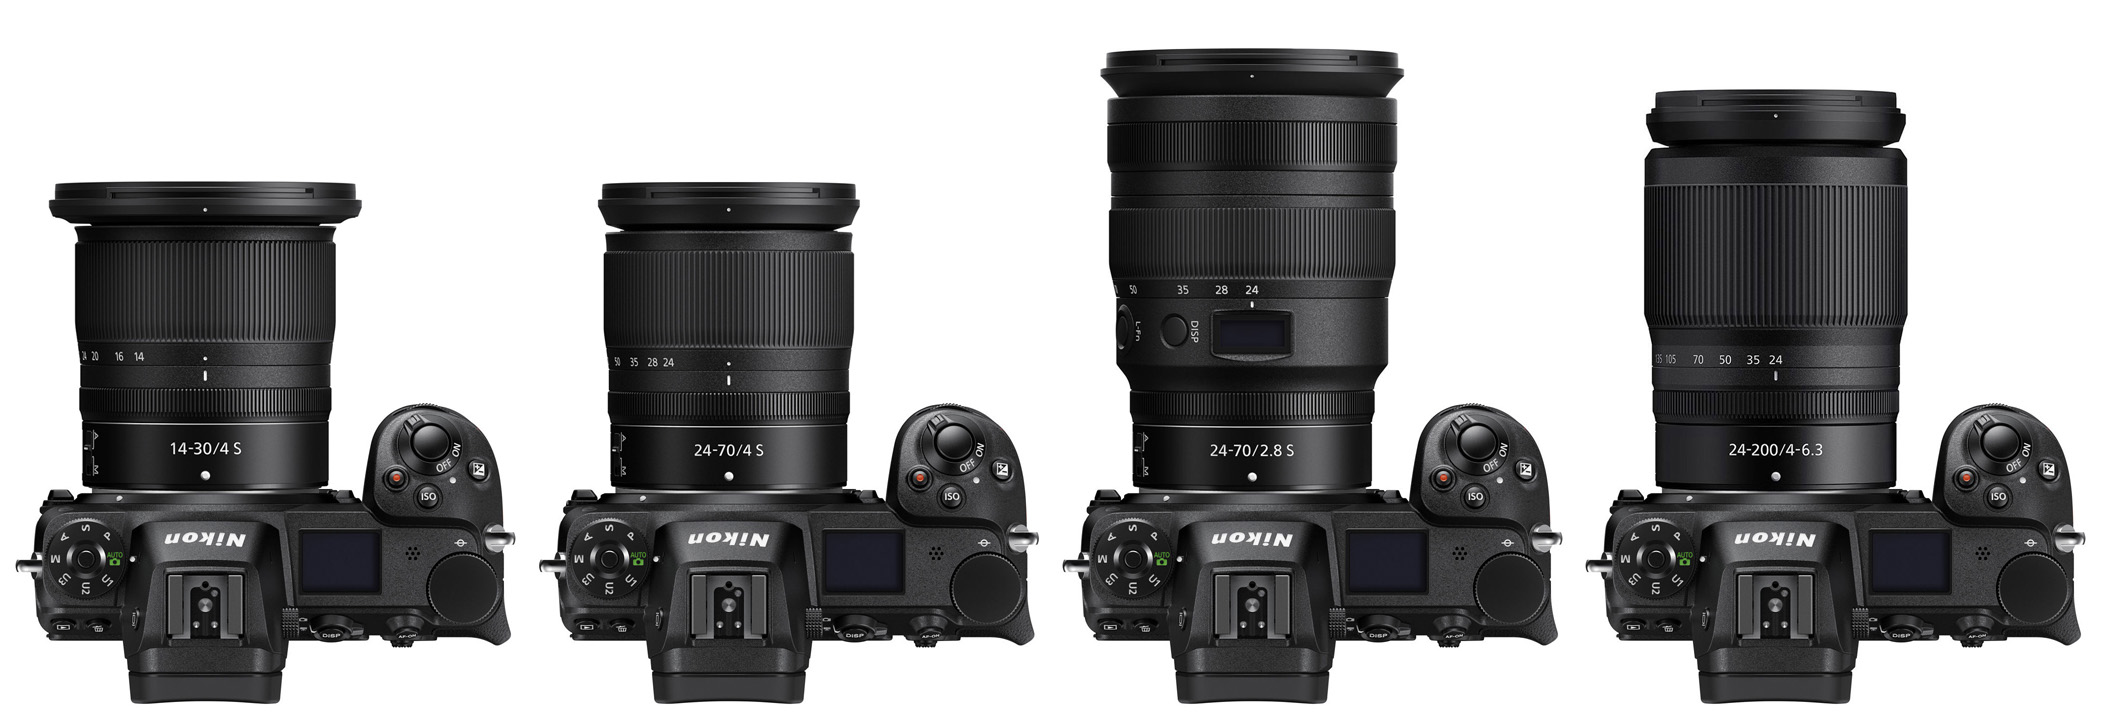 NIKKOR Z 20mm f/1.8 S and NIKKOR Z 24-200mm f/4-6.3 VR lens size  comparisons - Nikon Rumors